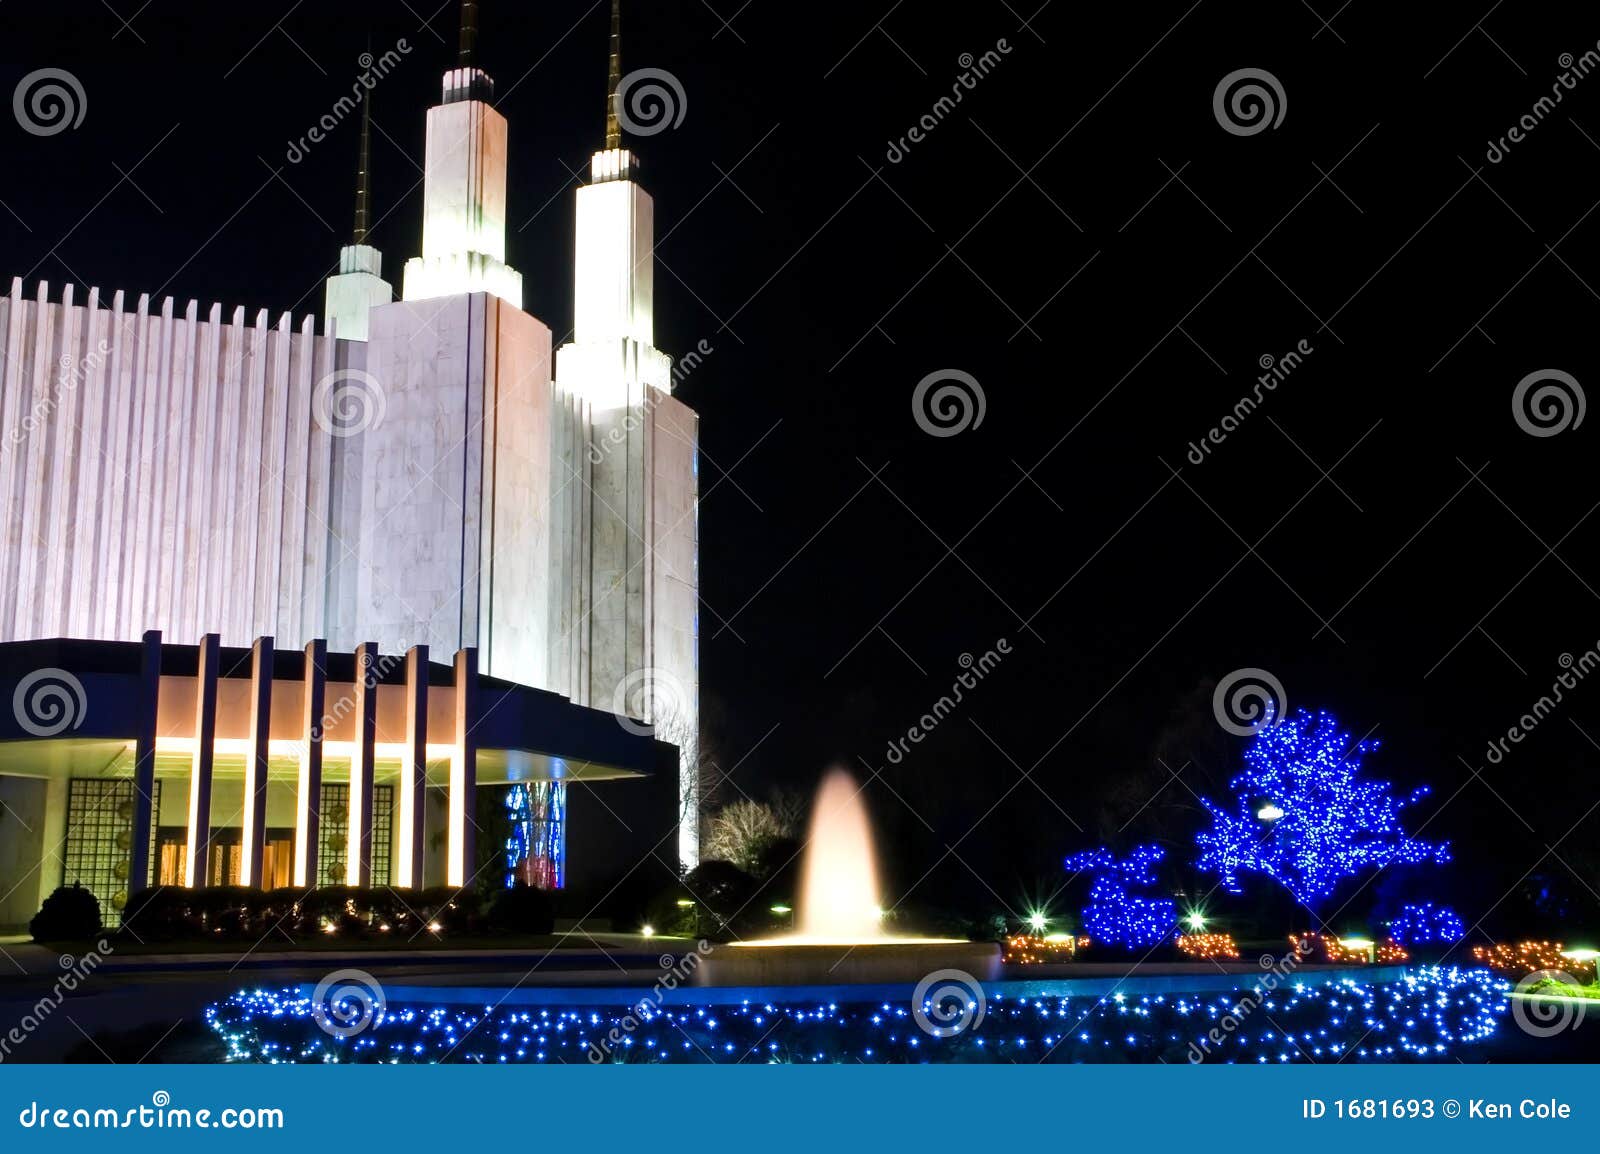 mormon temple - washington dc - 3